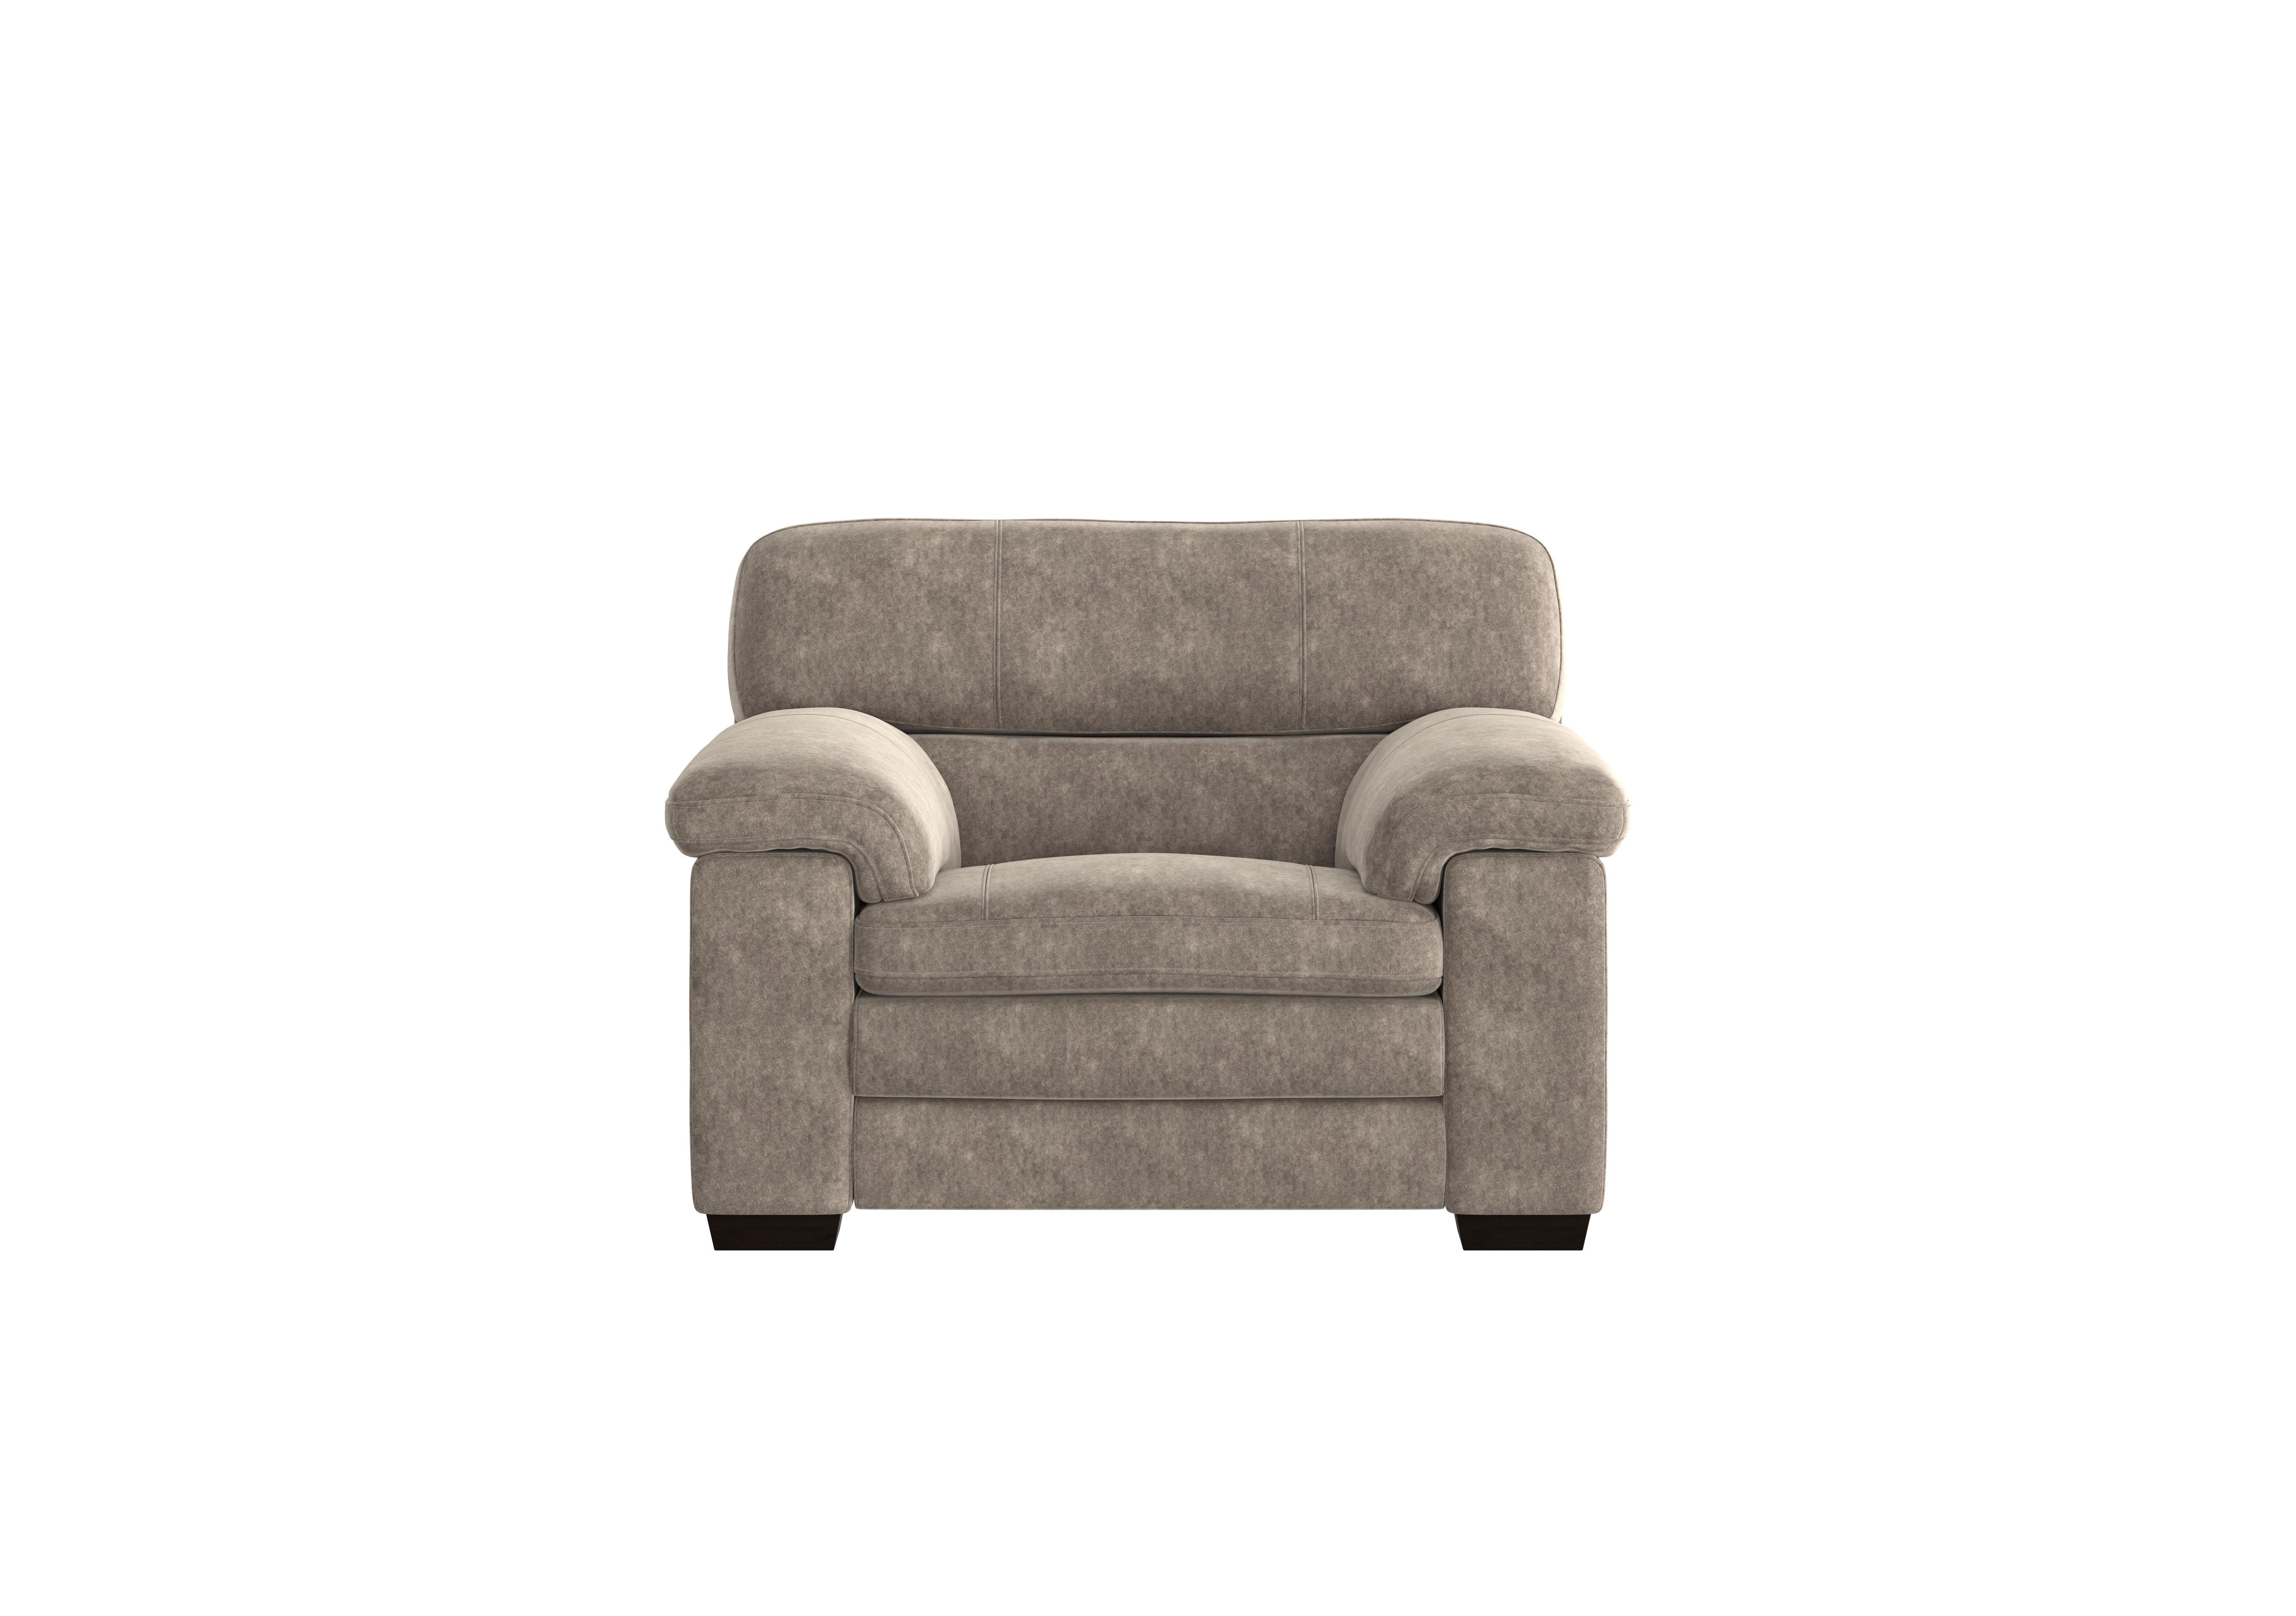 Cozee Fabric Armchair in Bfa-Bnn-R29 Fv1 Mink on Furniture Village